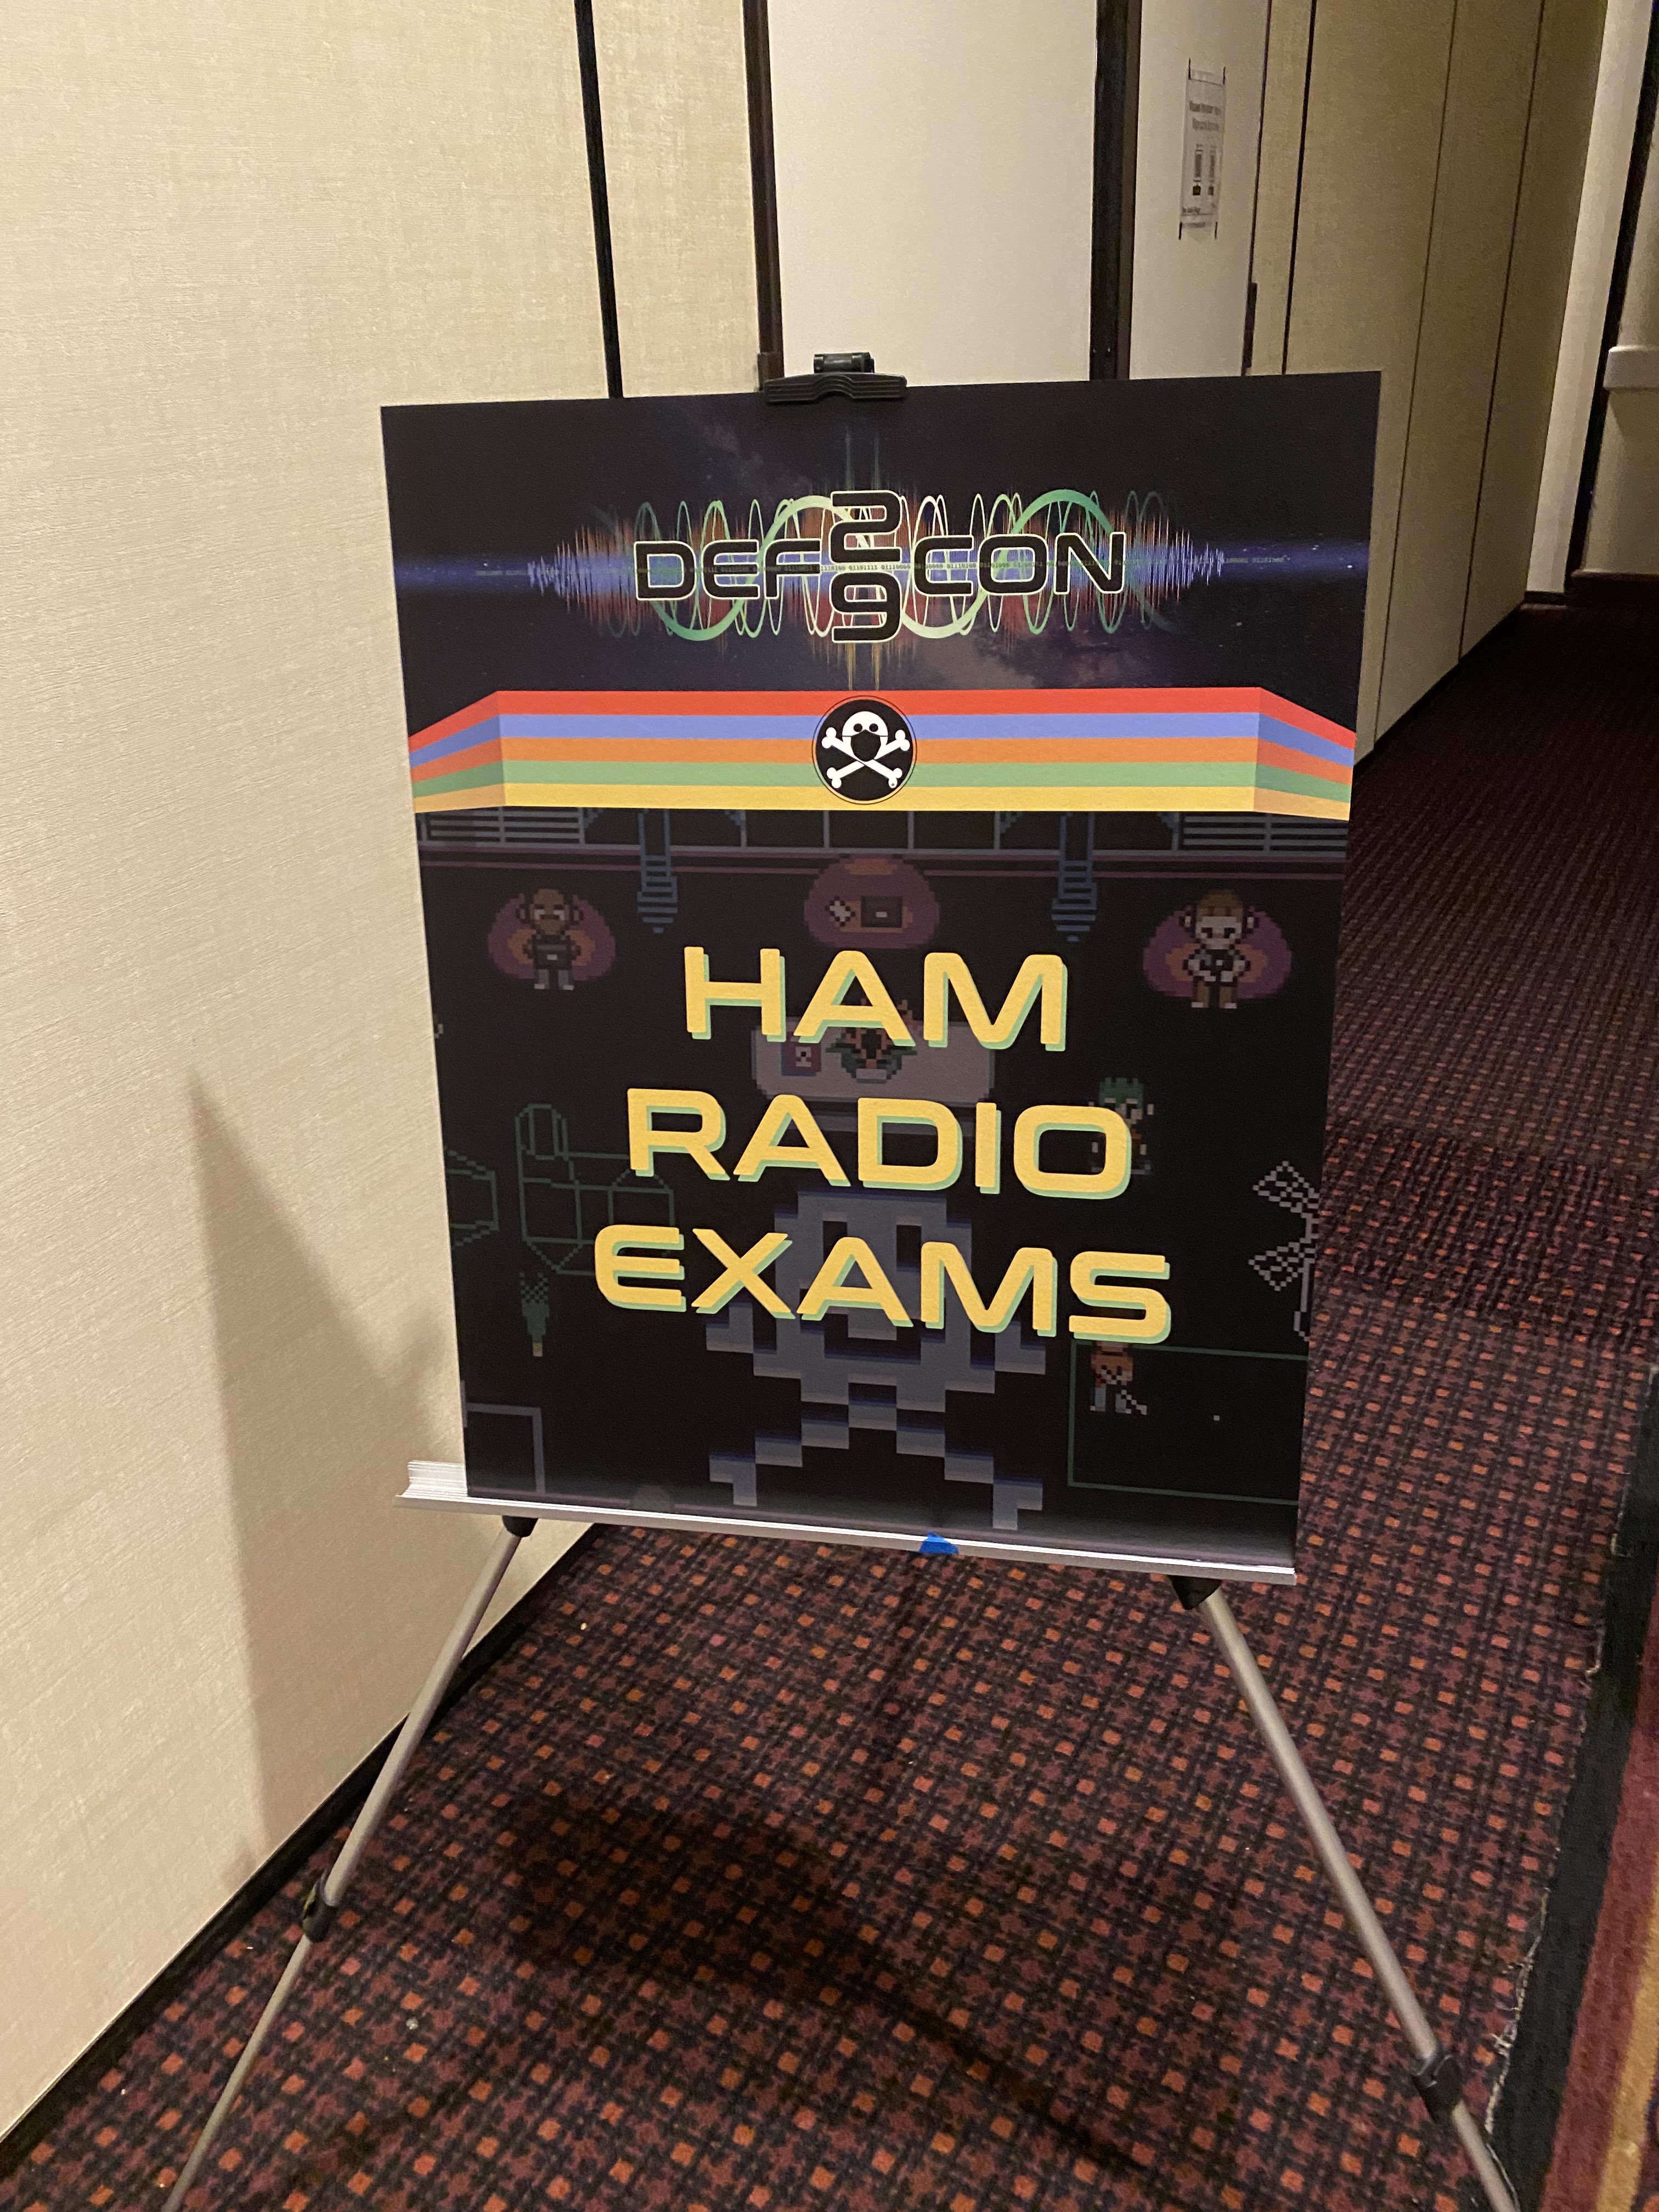 A sign advertising Ham Radio Exams